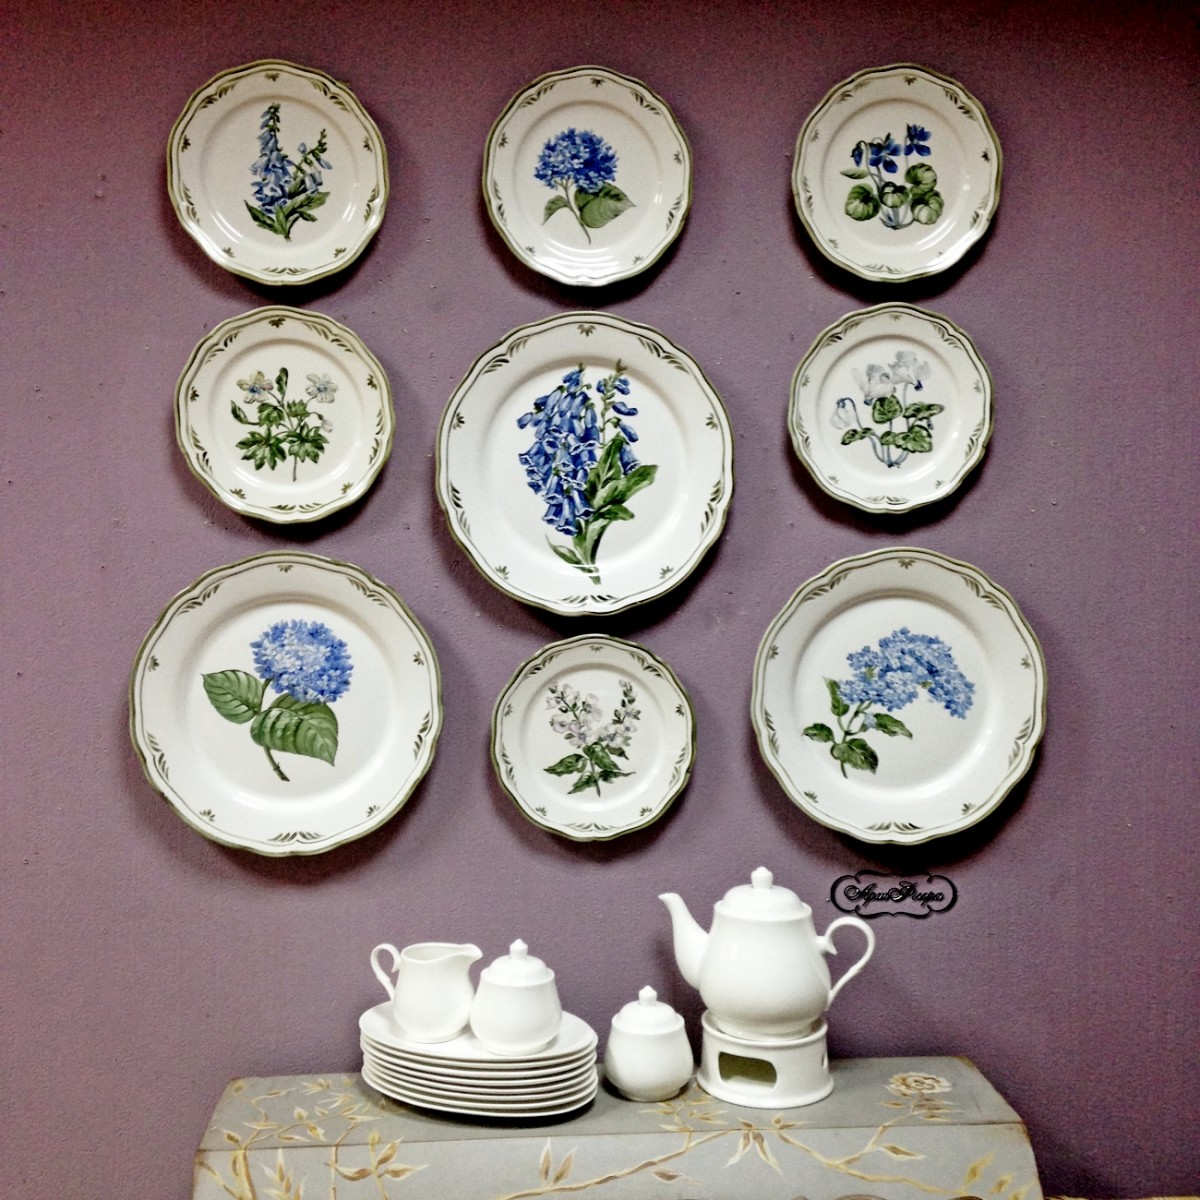 декоративные тарелки на стене фото